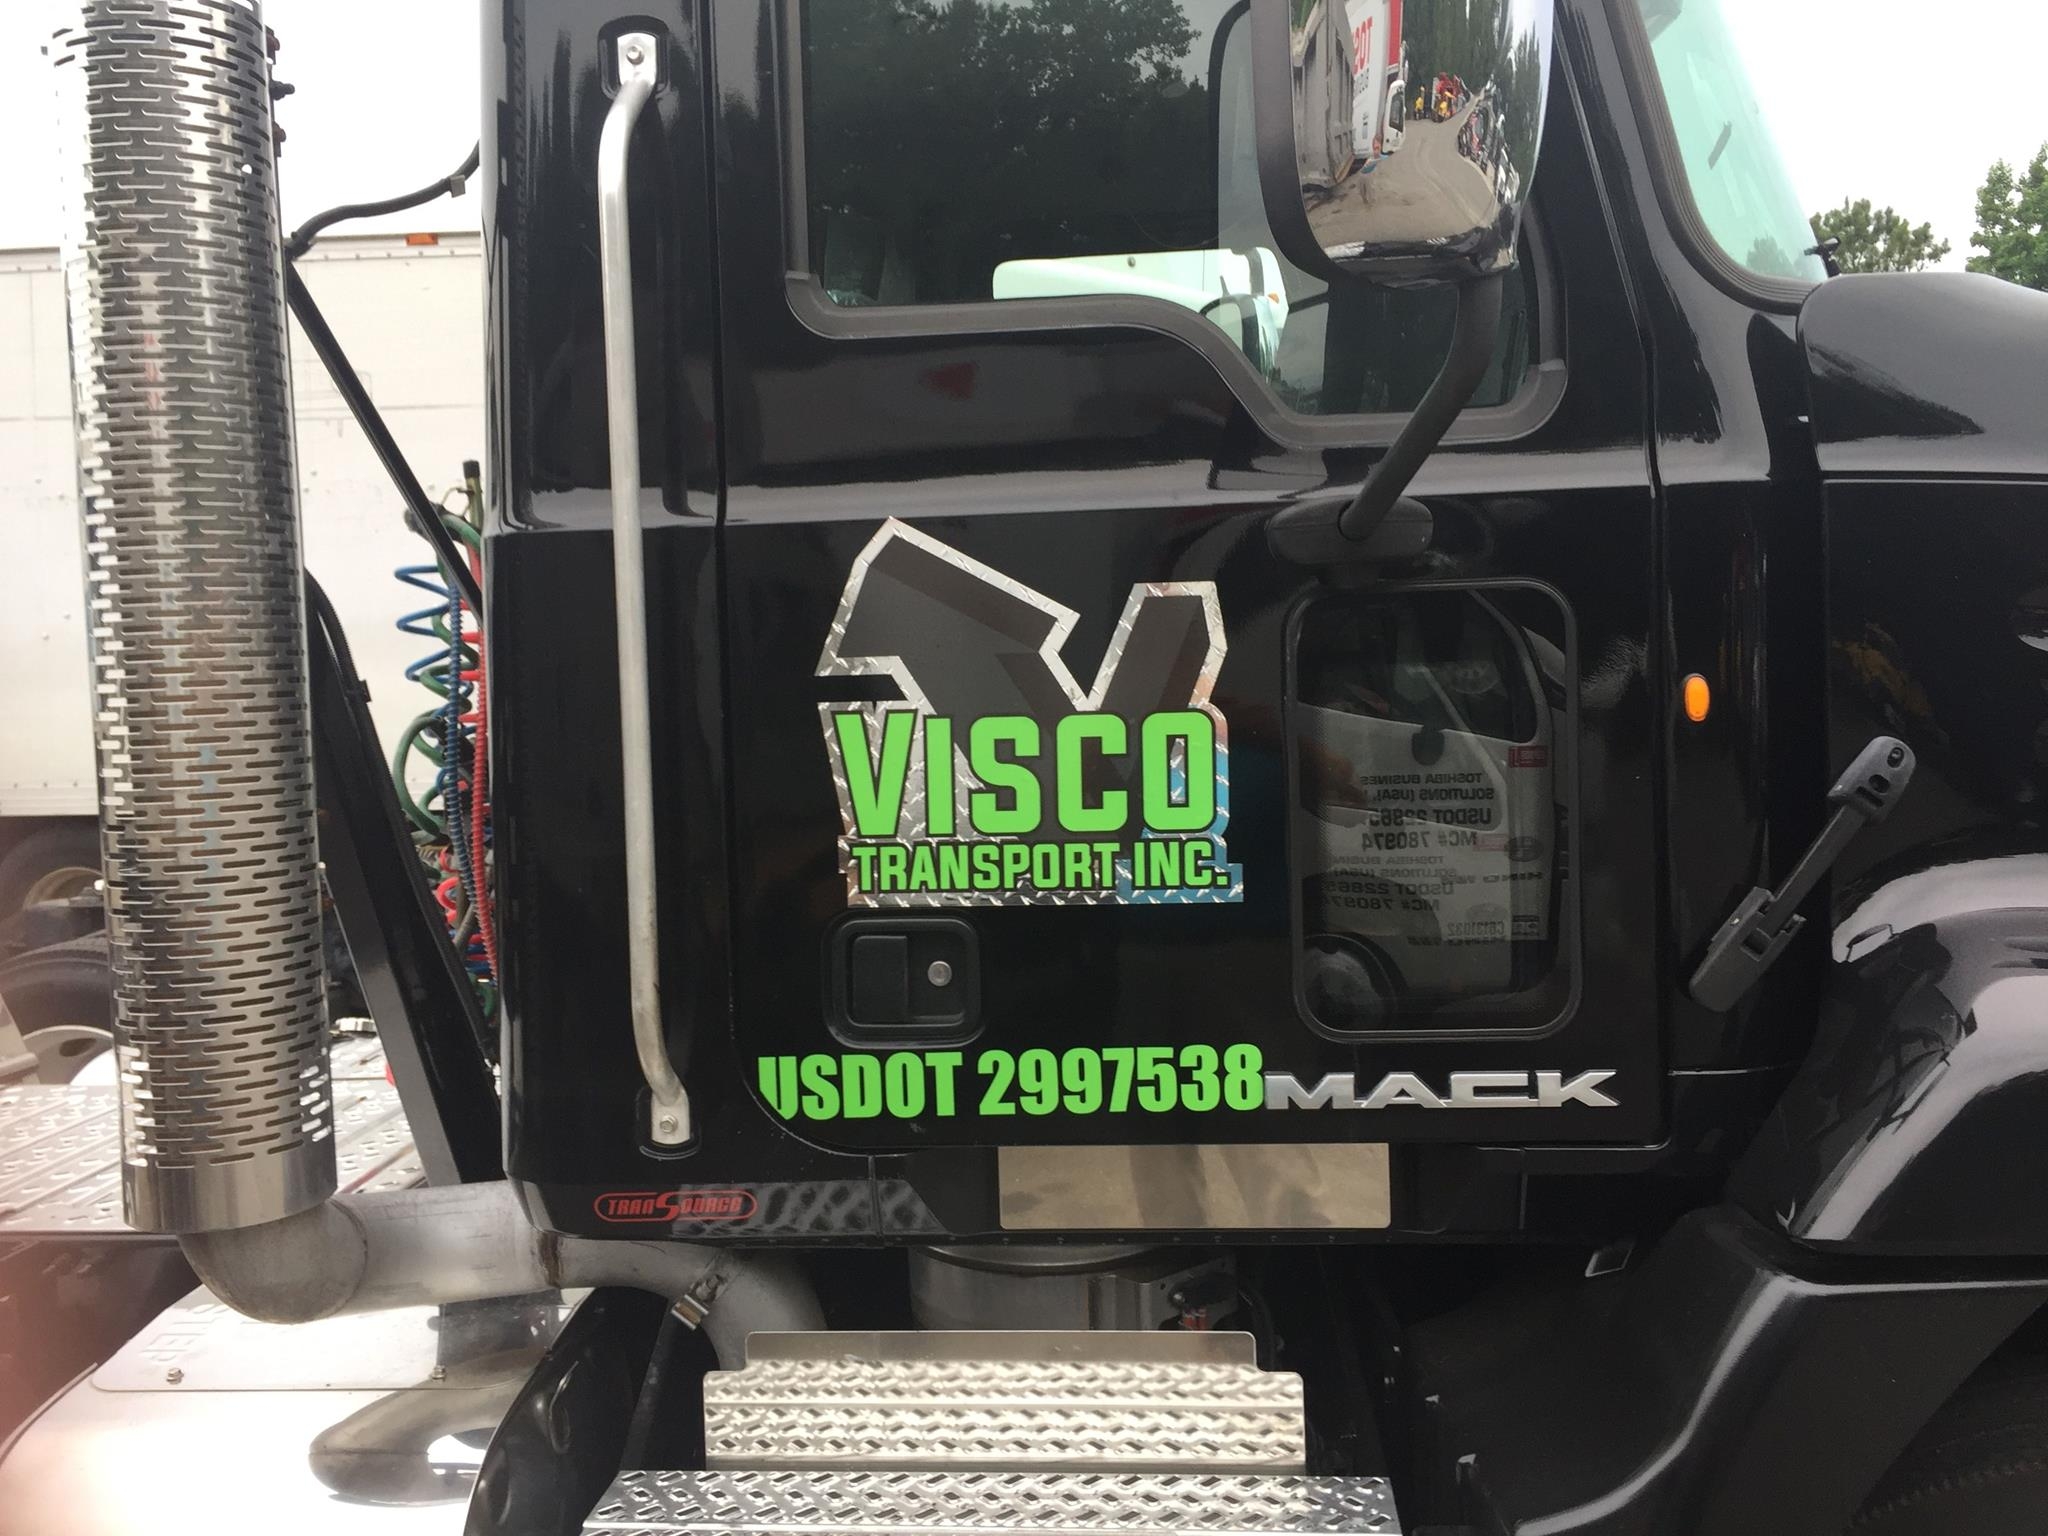 Partial truck Wrap for Visco